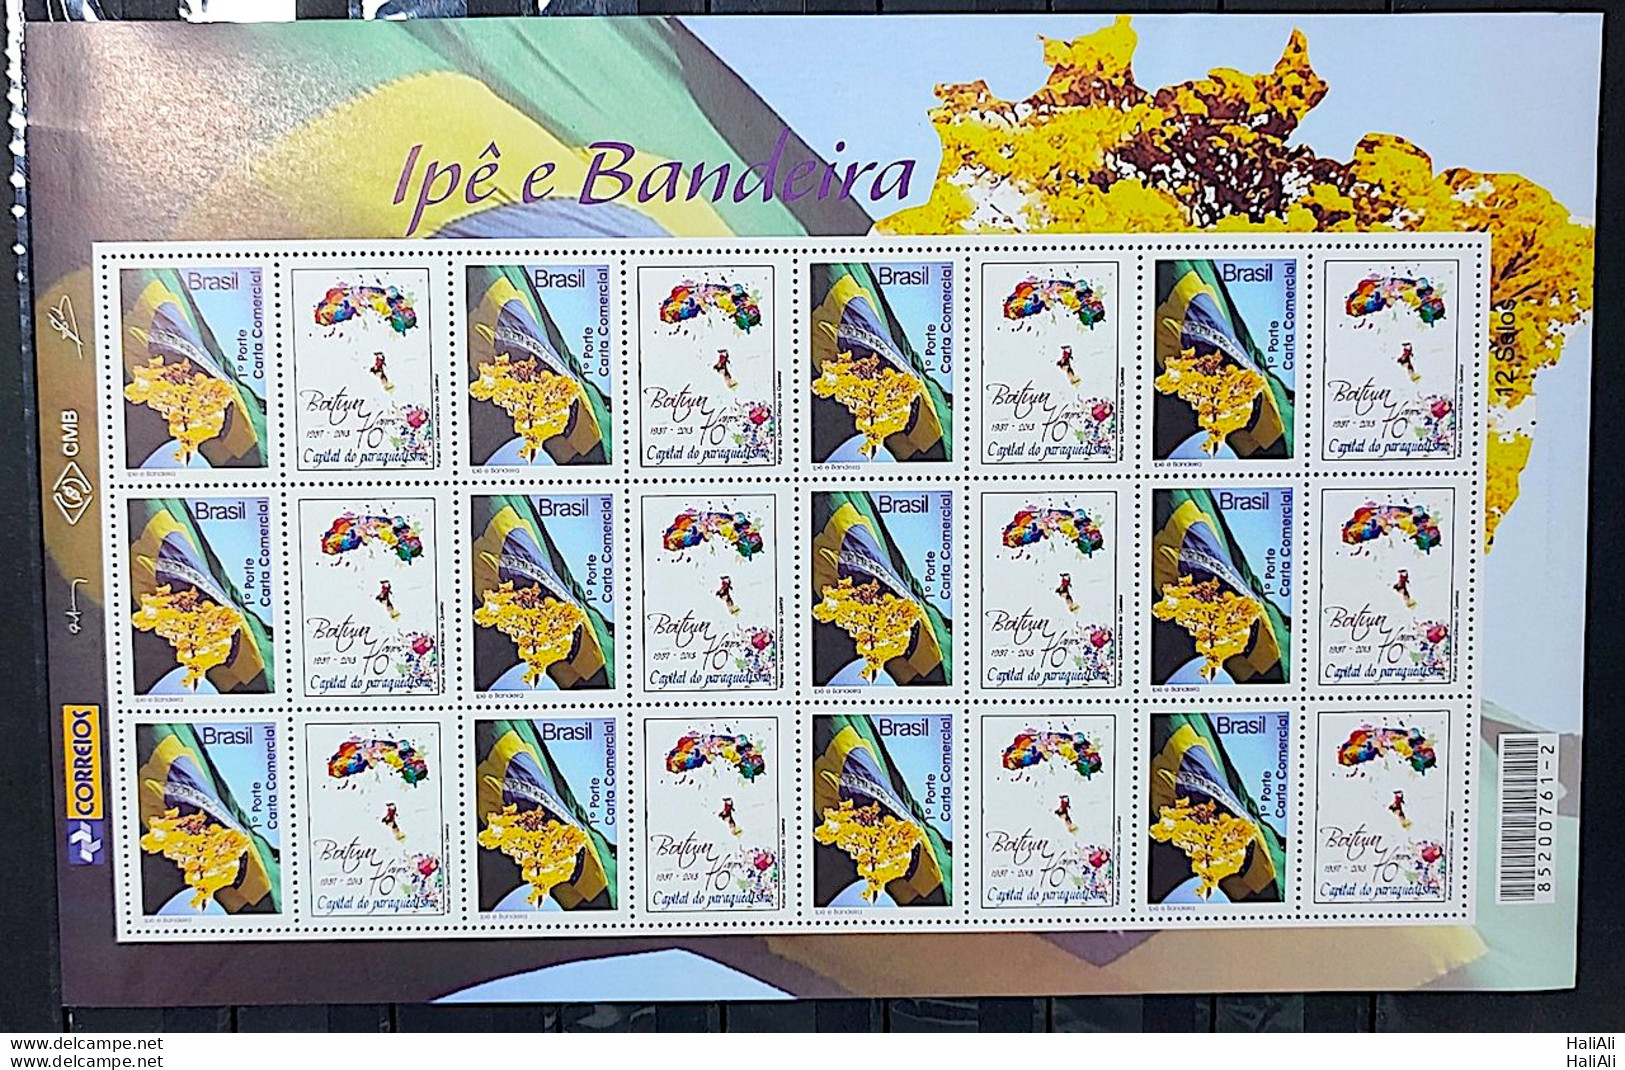 C 2854 Brazil Personalized Stamp Ipe Flag Boituva Drawing 2013 Sheet - Personalisiert